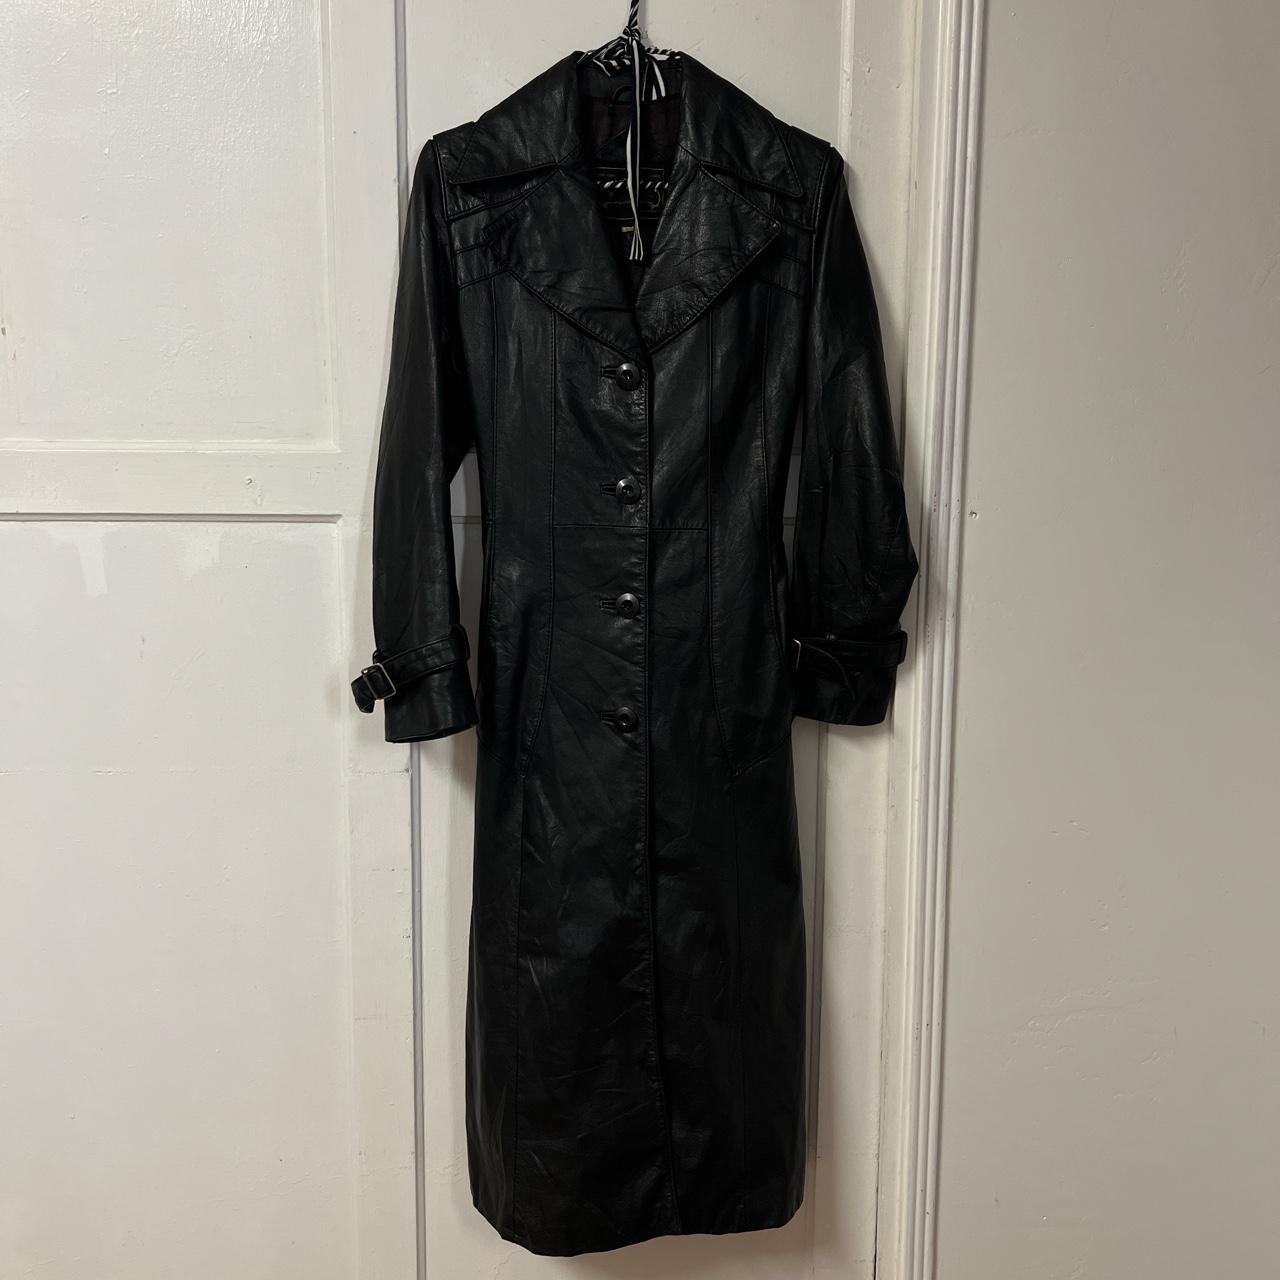 Deep black vintage genuine leather trench coat that... - Depop